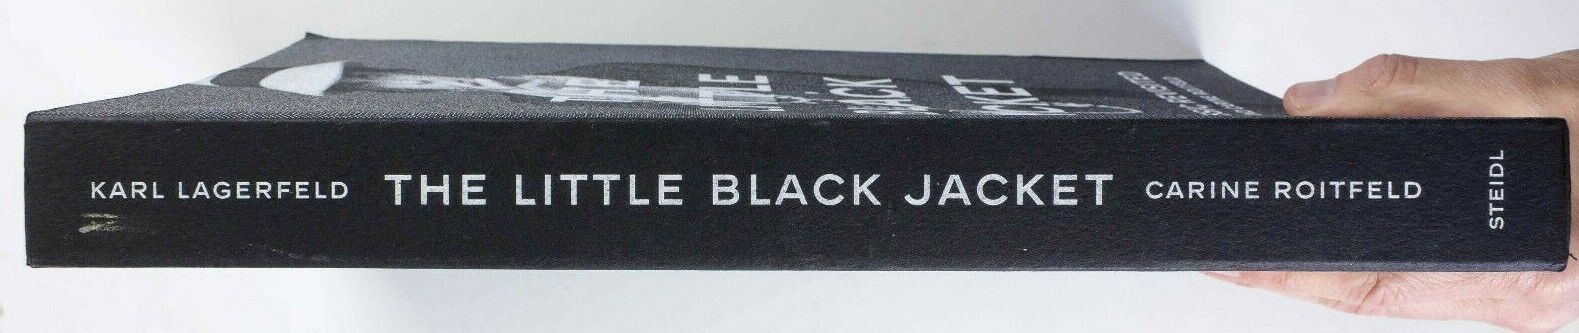 Chanel LITTLE BLACK JACKET book BAPTISTE GIABICONI Sofia Coppola